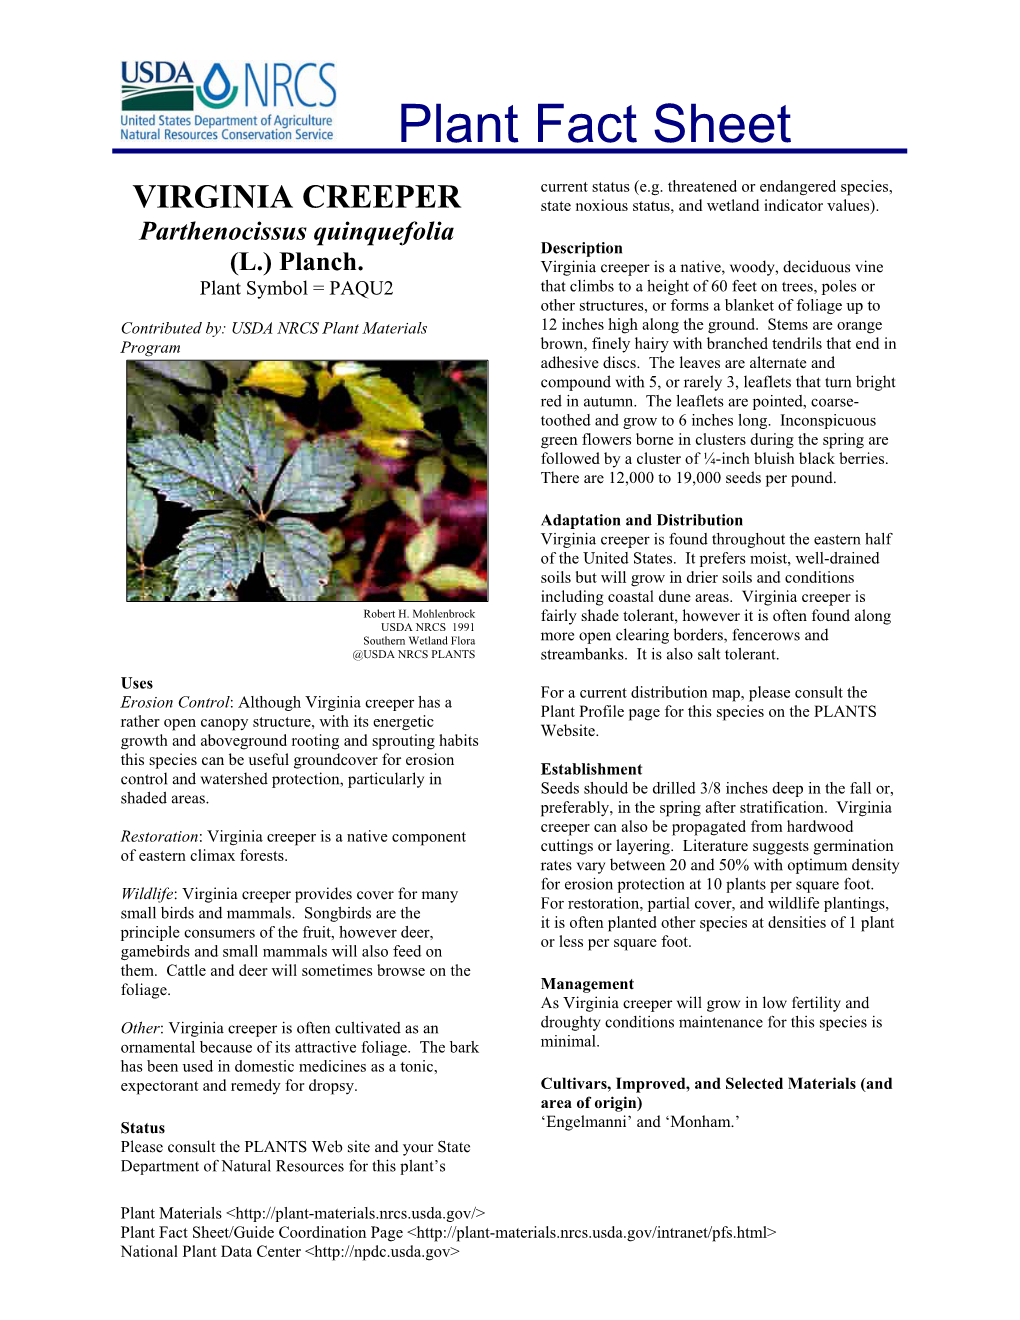 VIRGINIA CREEPER State Noxious Status, and Wetland Indicator Values)